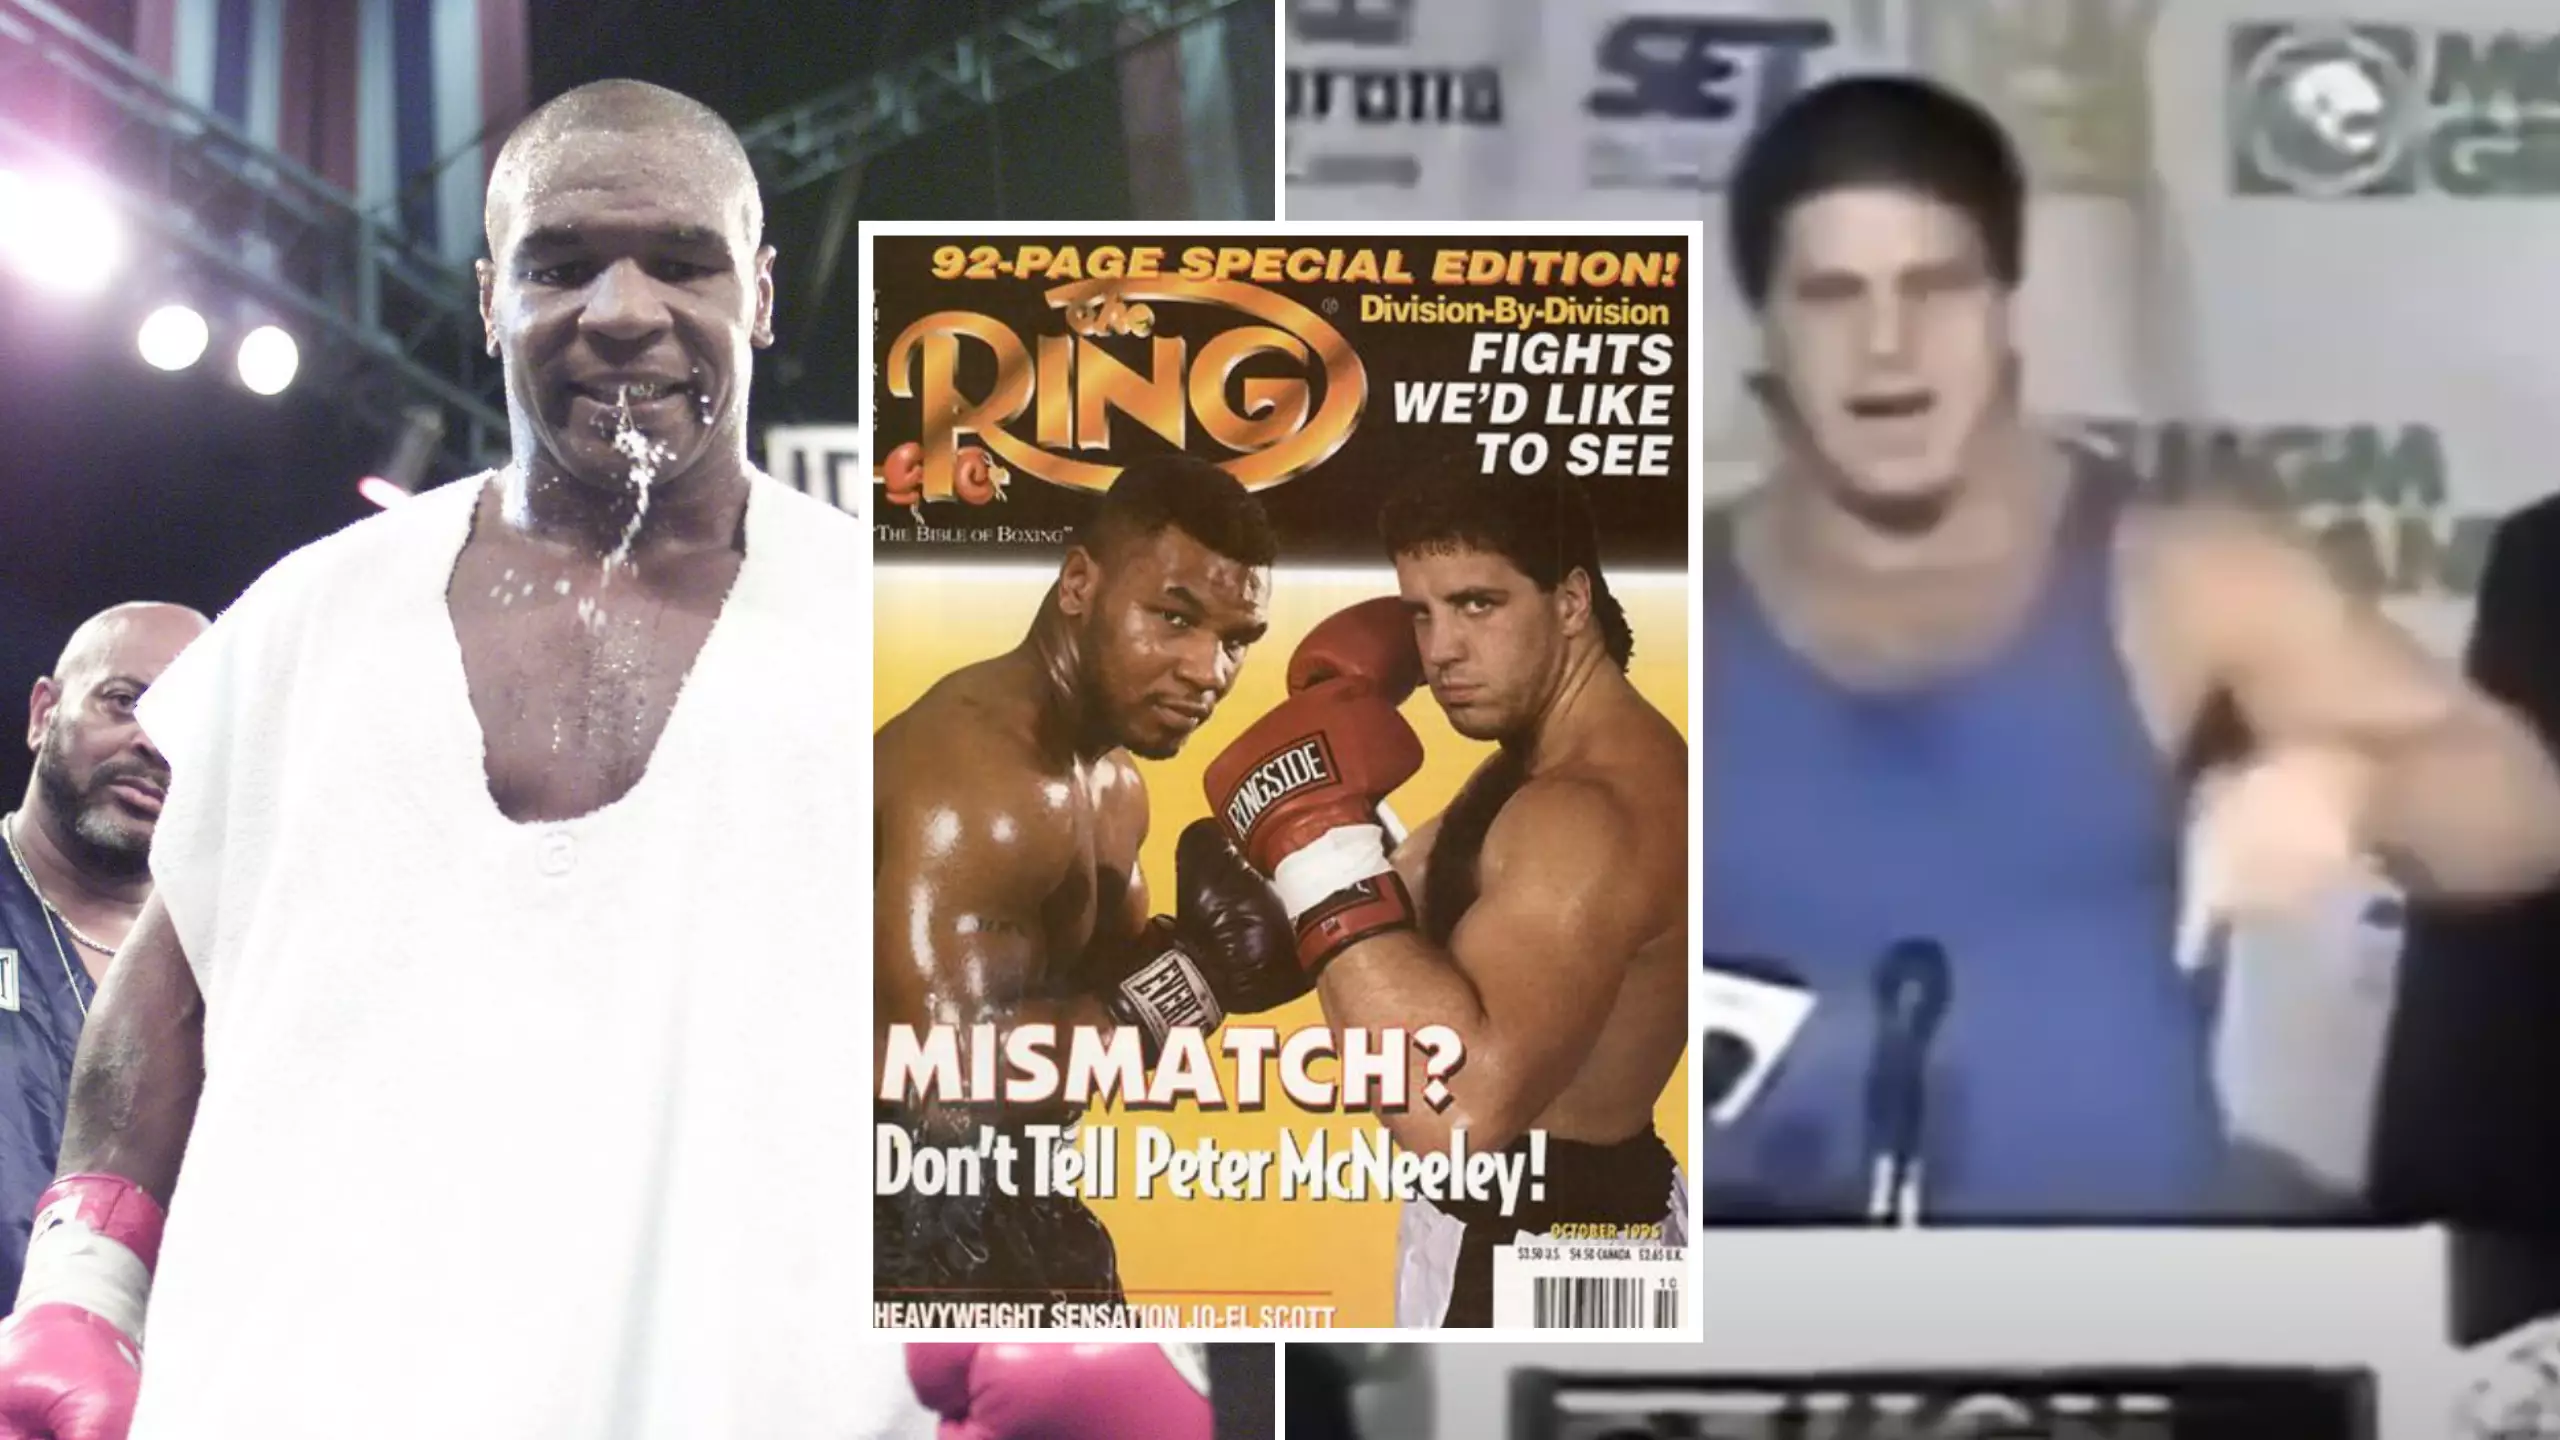 Mike Tyson's Last Comeback Opponent Helped Him Make $96 Million - Then Lived In A Crack Den